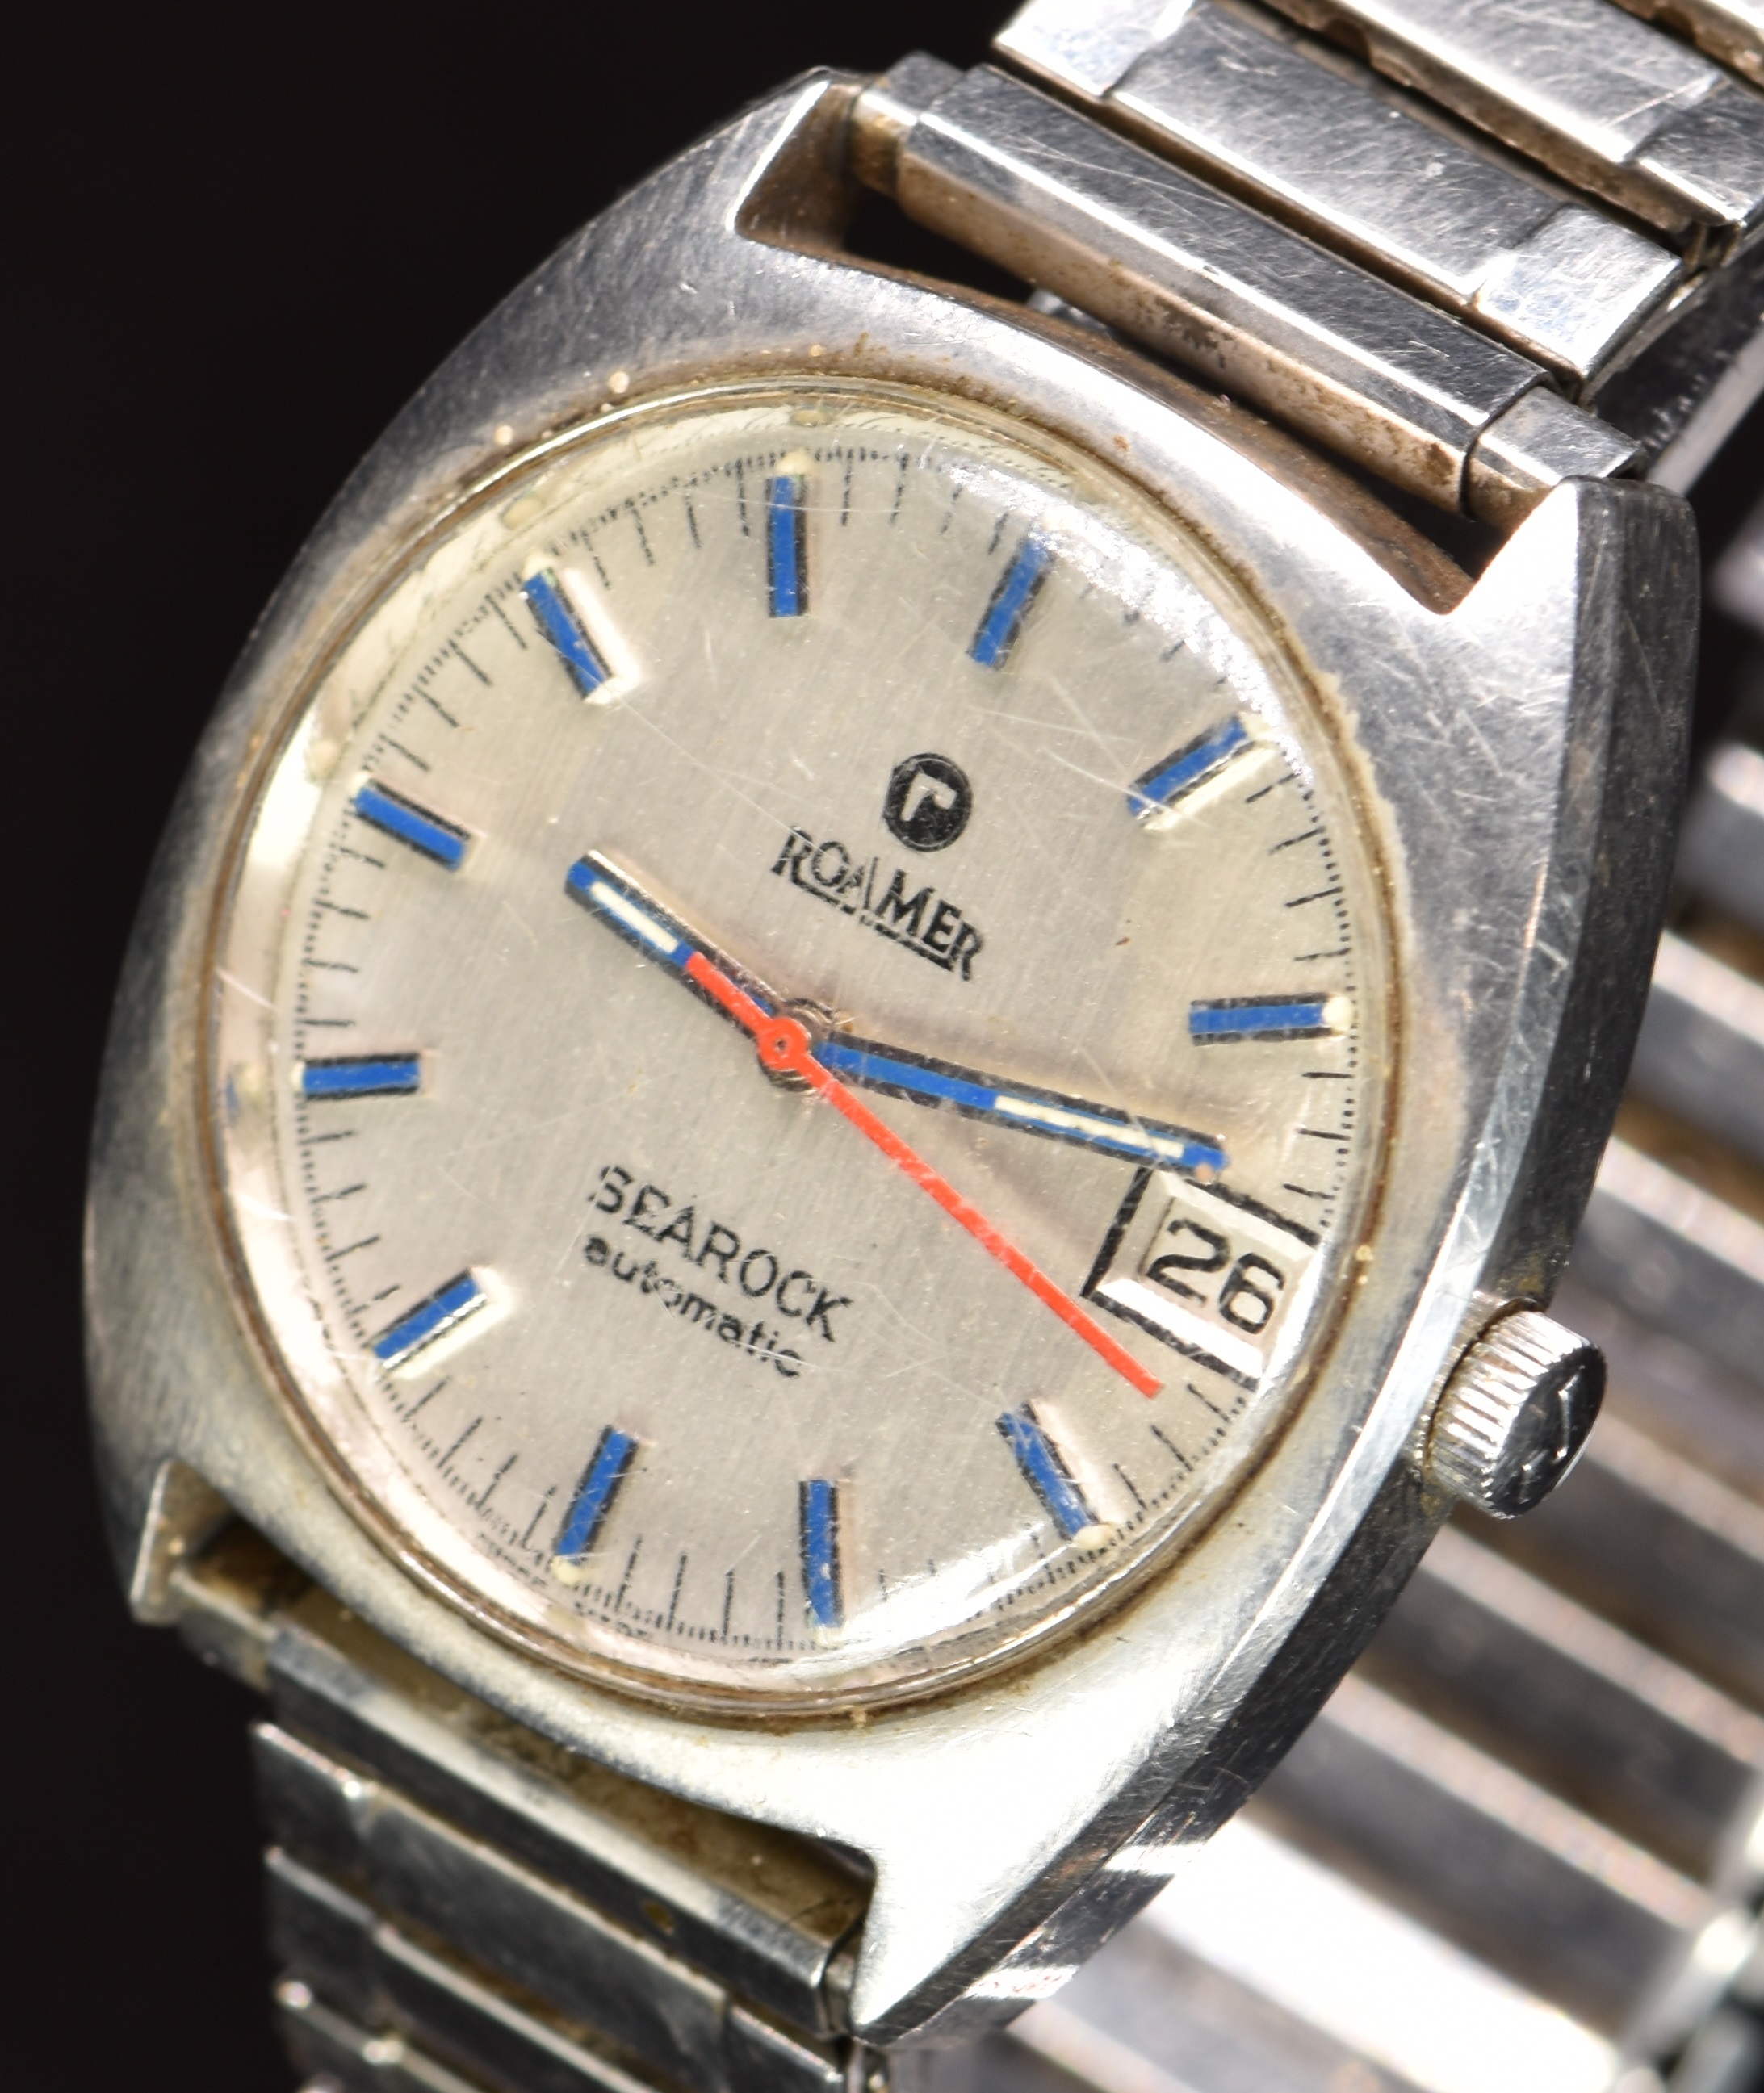 Roamer Searock gentleman’s automatic wristwatch ref. 471.2120.328 with date aperture, silver dial, - Image 2 of 5